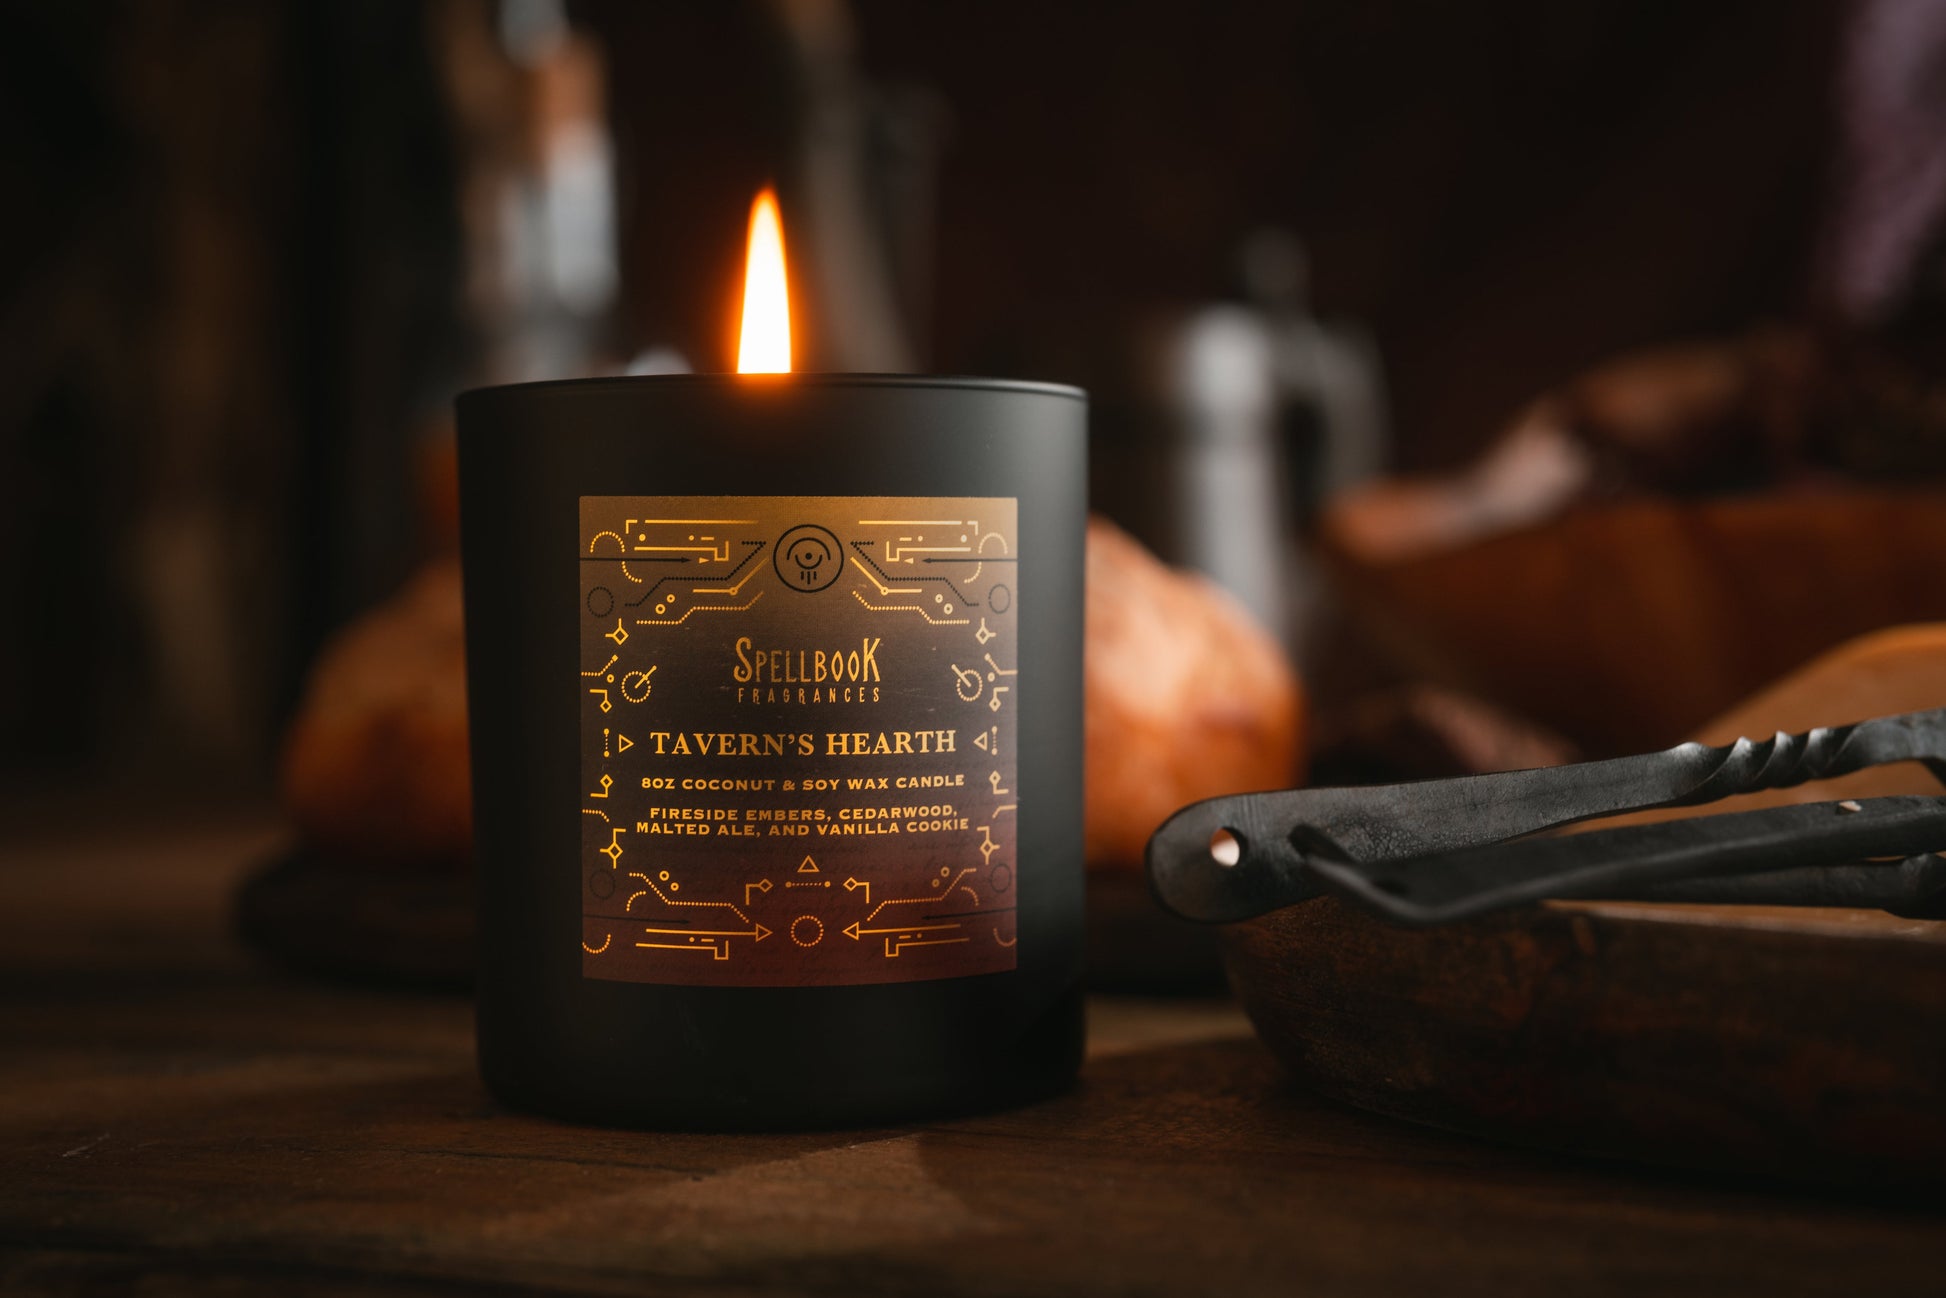 Tavern's Hearth 8 oz Candle - Spellbook Fragrances